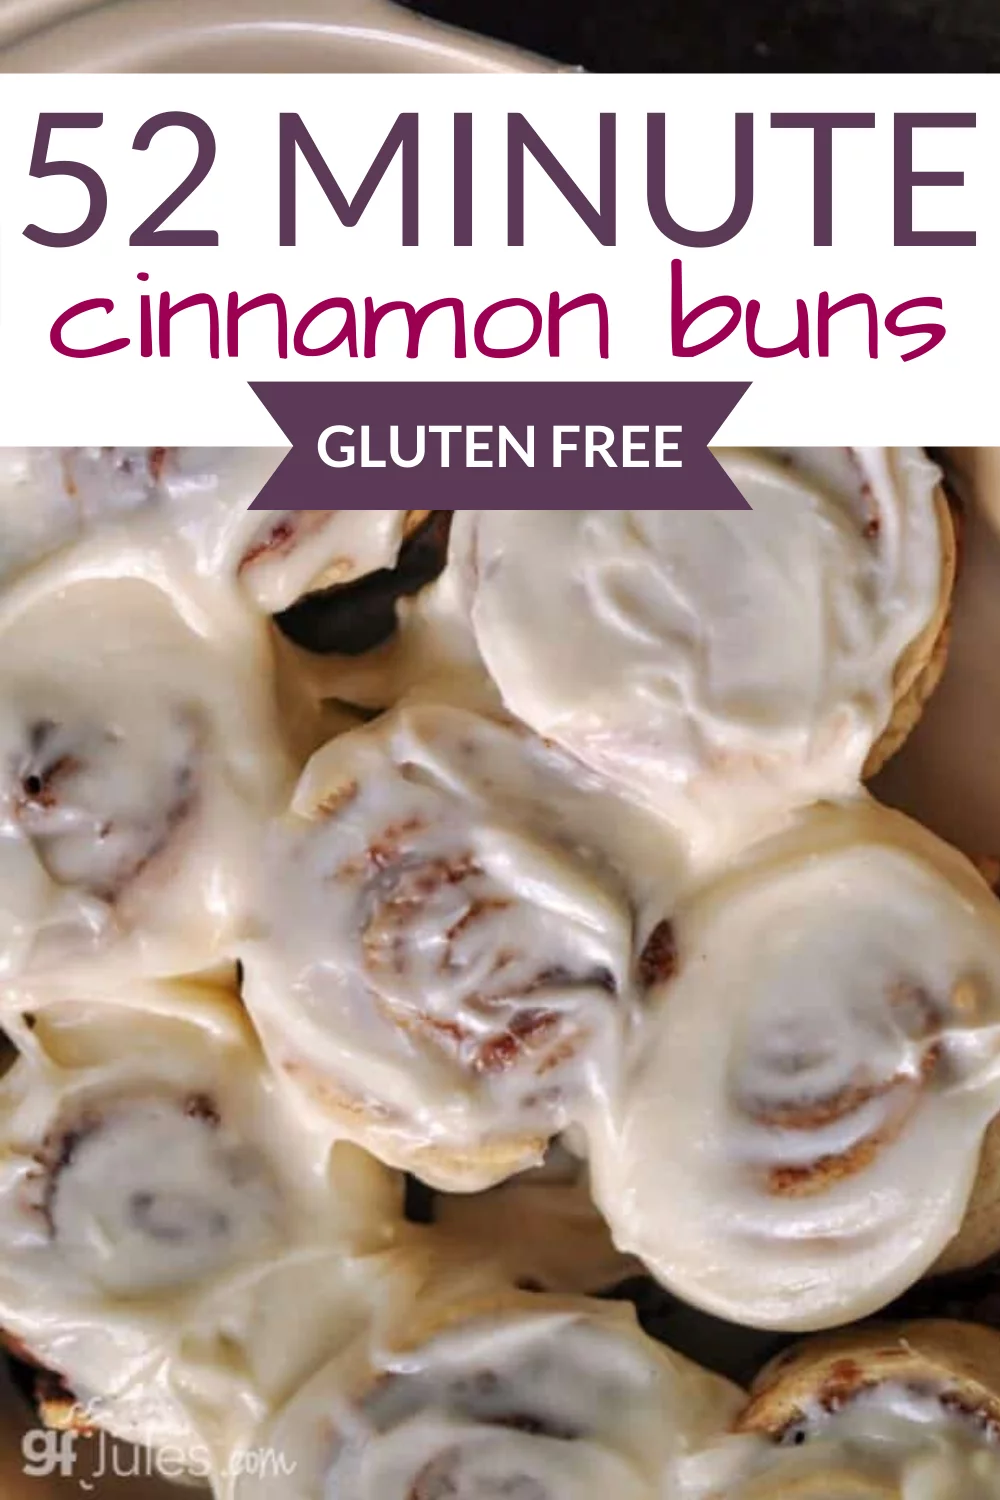 52 Minute Gluten Free Cinnamon Bun Recipe